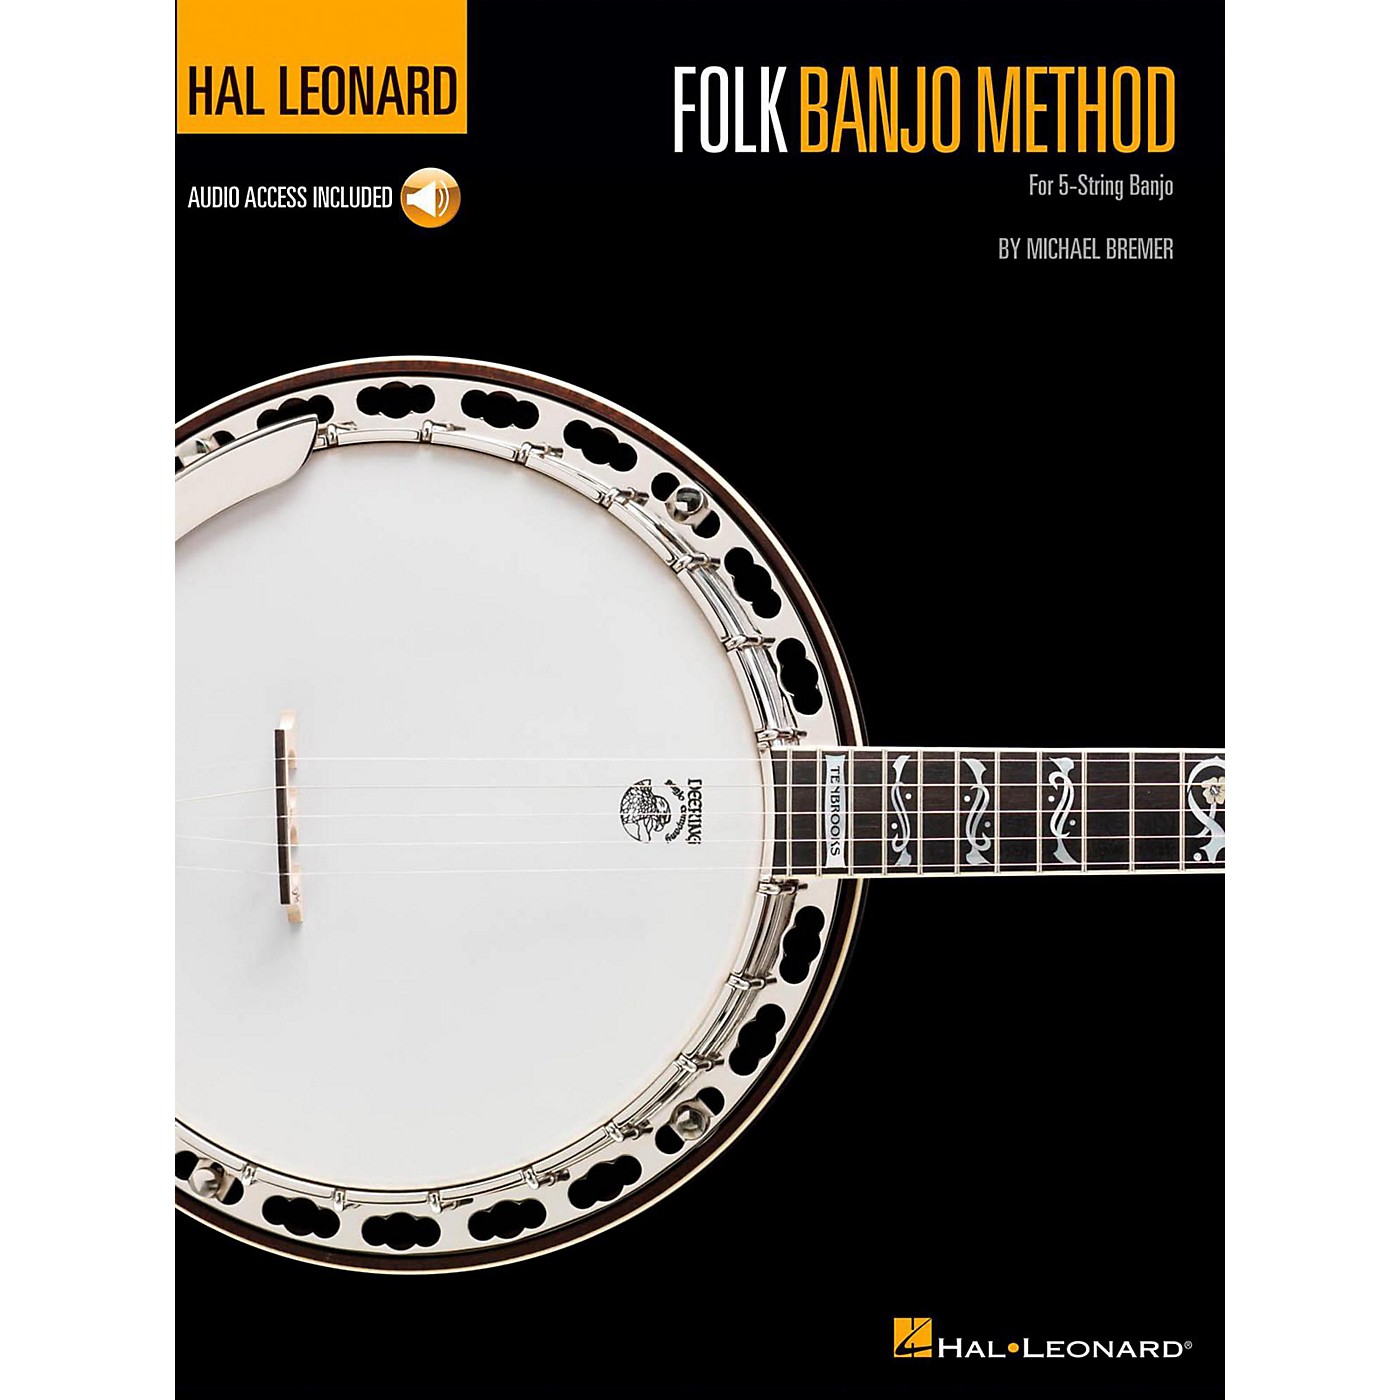 Hal Leonard Folk Banjo Method (Book/Audio Online) thumbnail